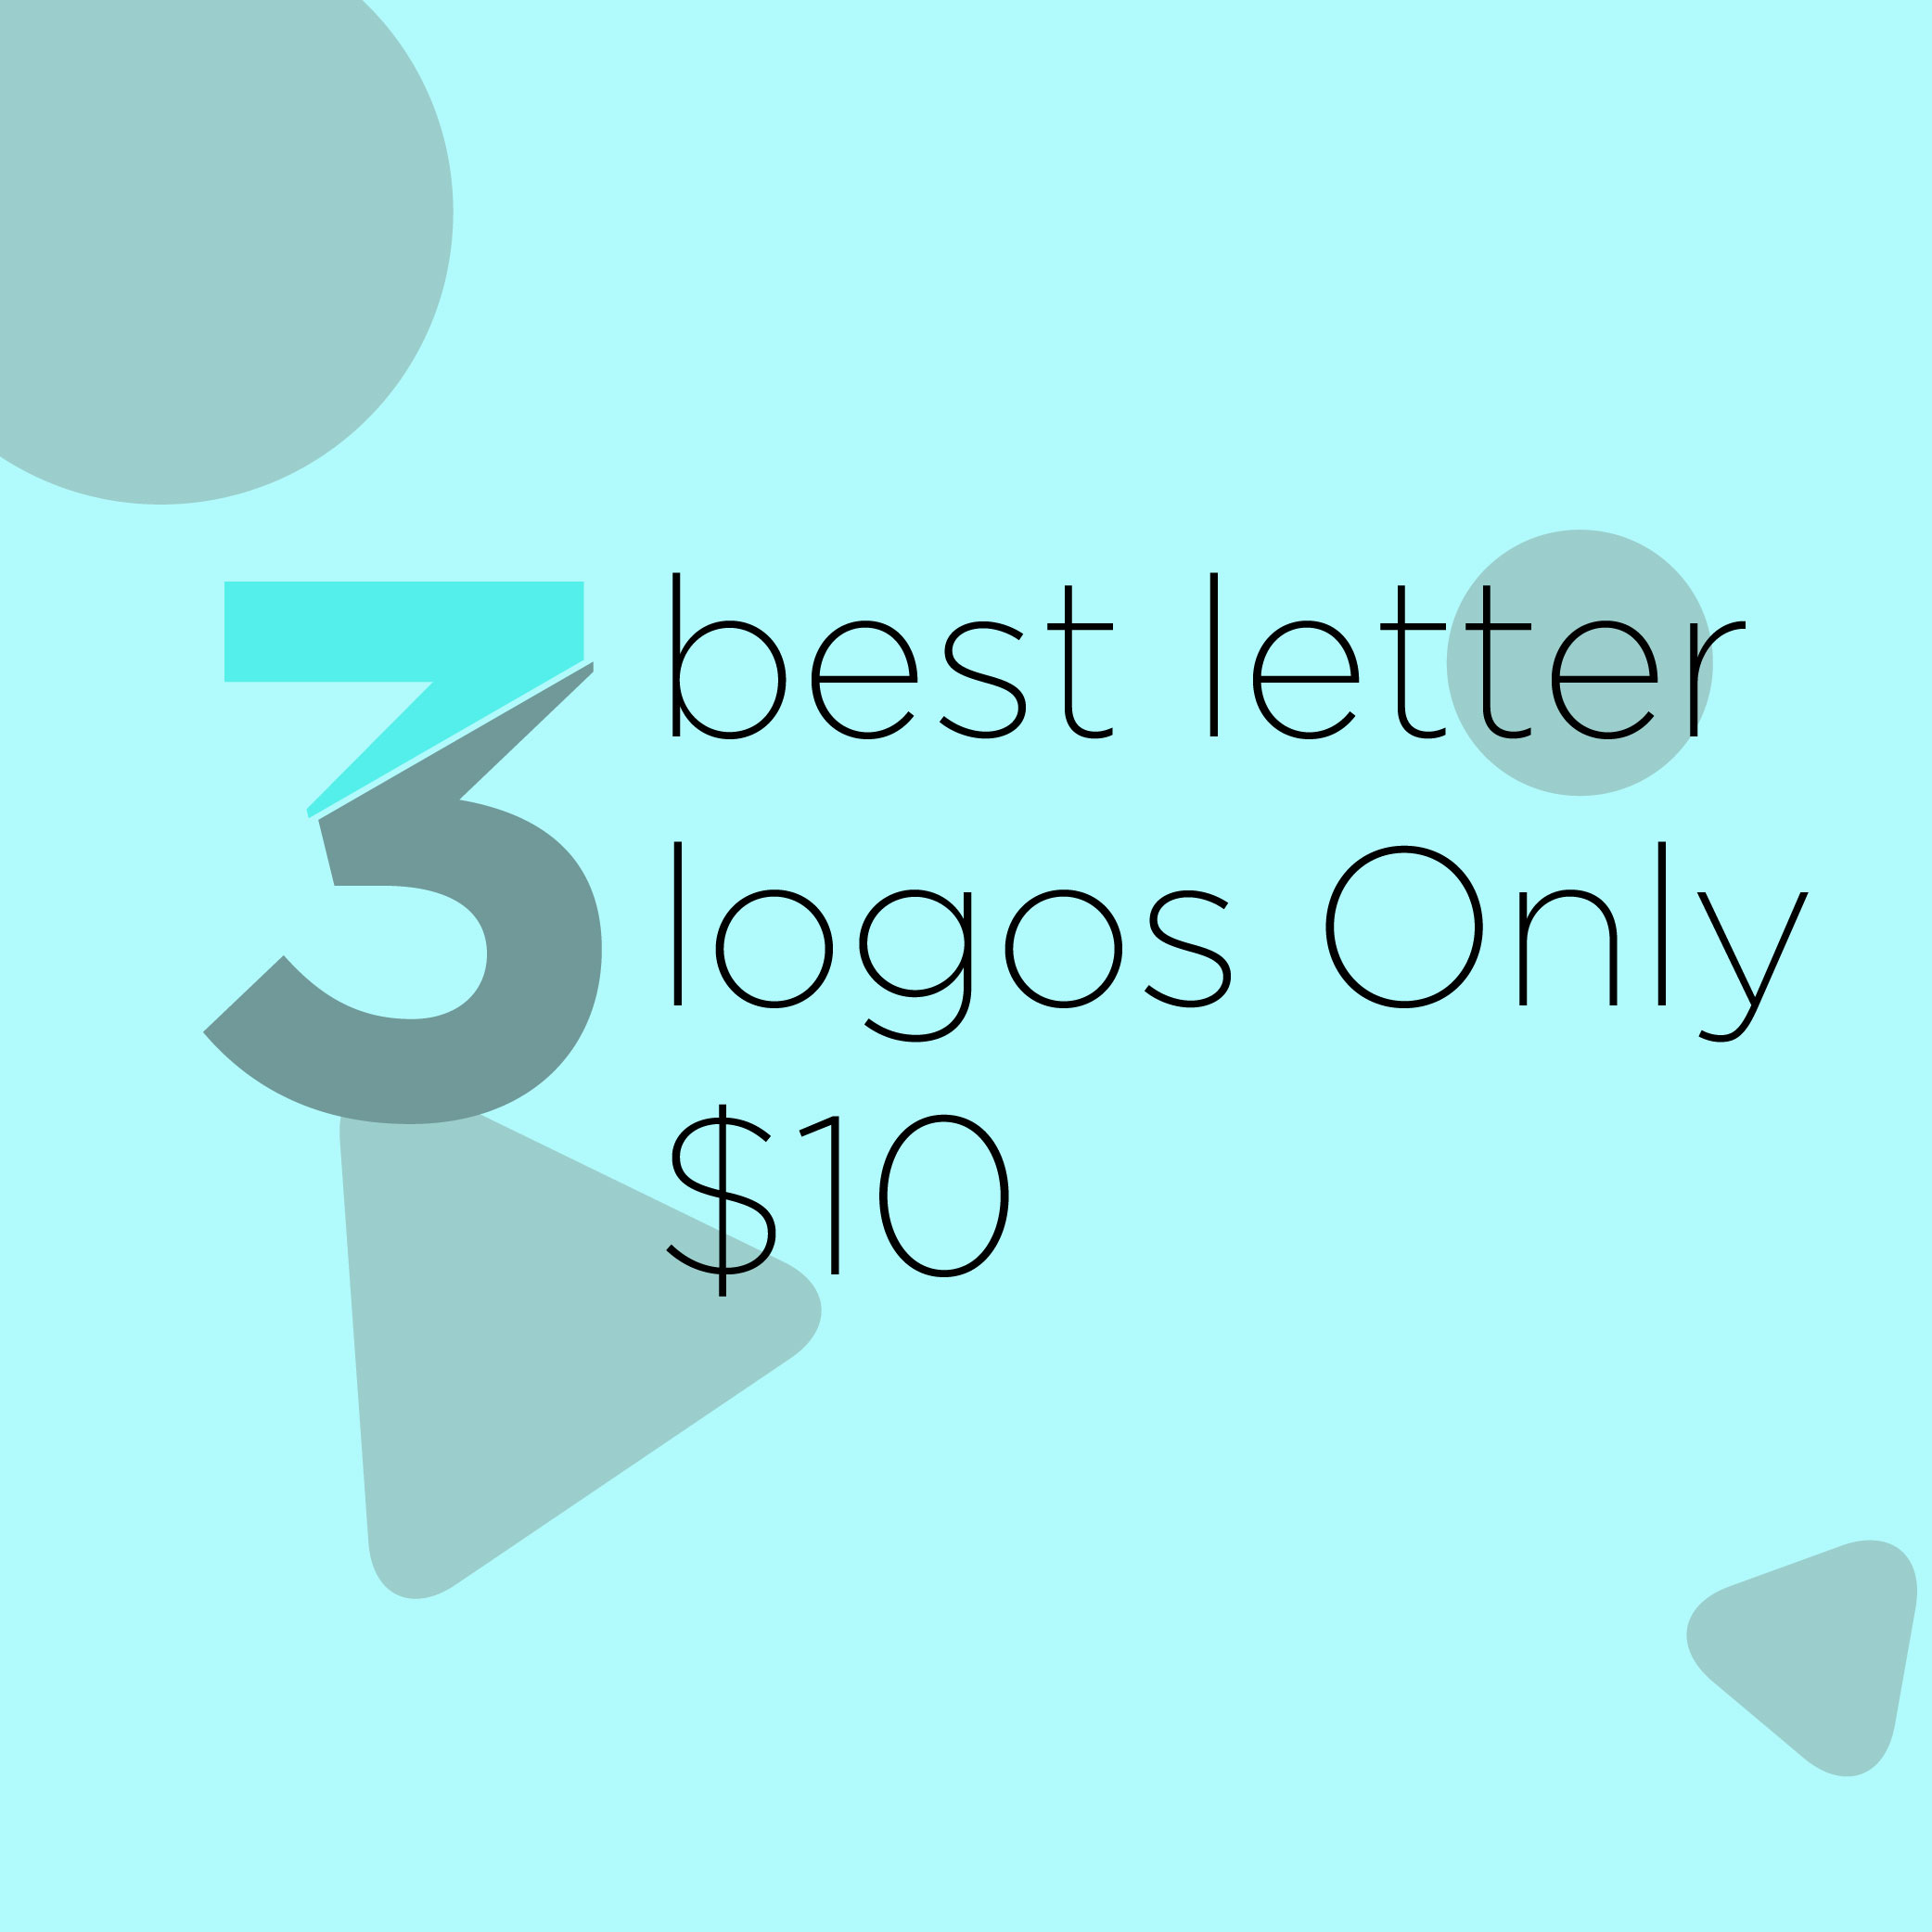 Best Letter Logos cover image.